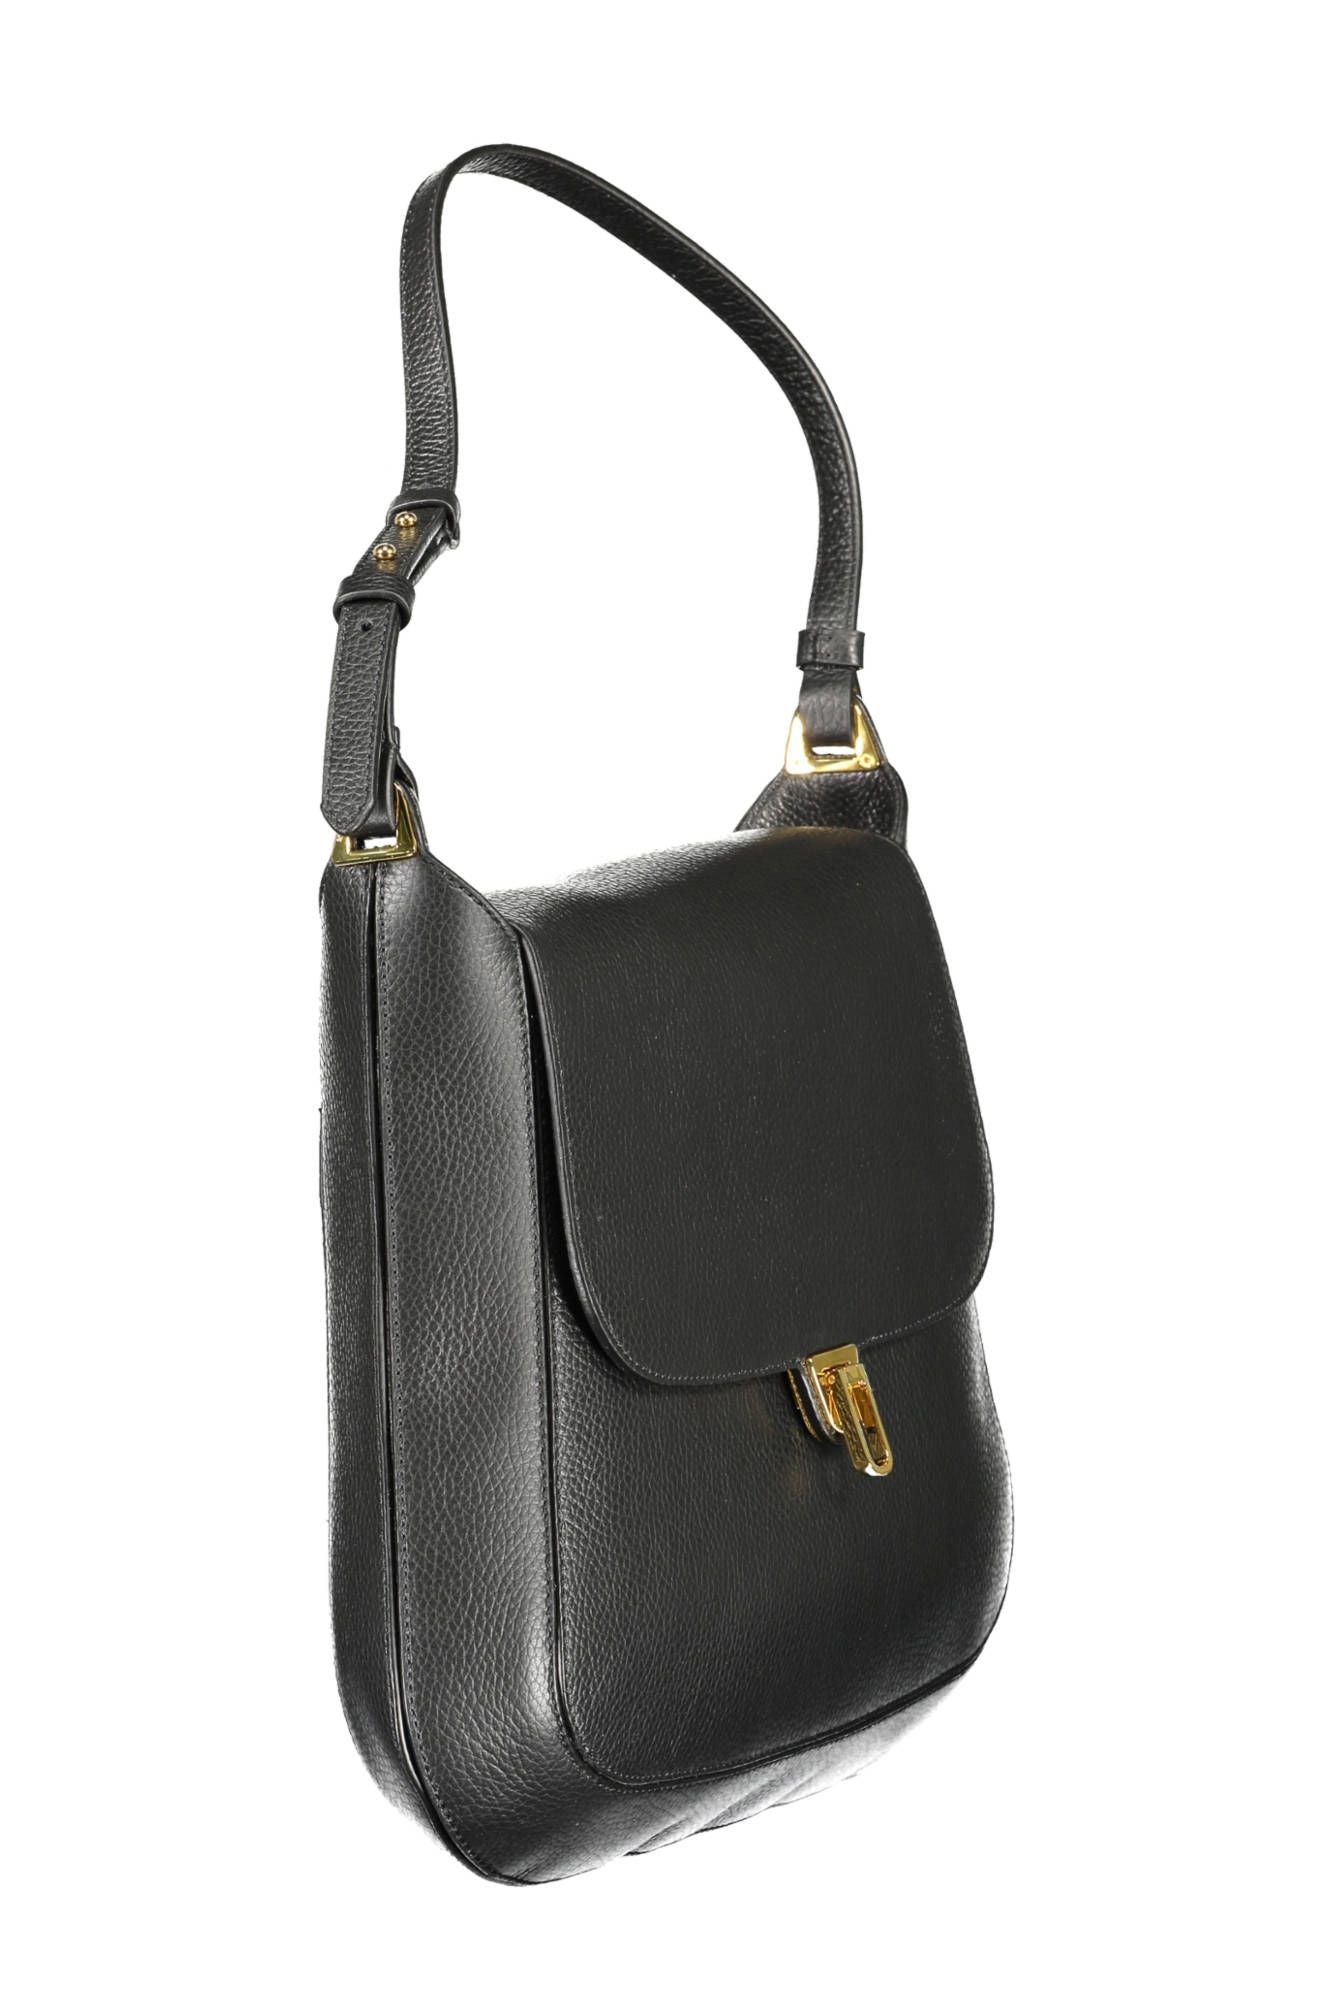 Coccinelle Elegant Leather Shoulder Bag with Turn Lock Closure